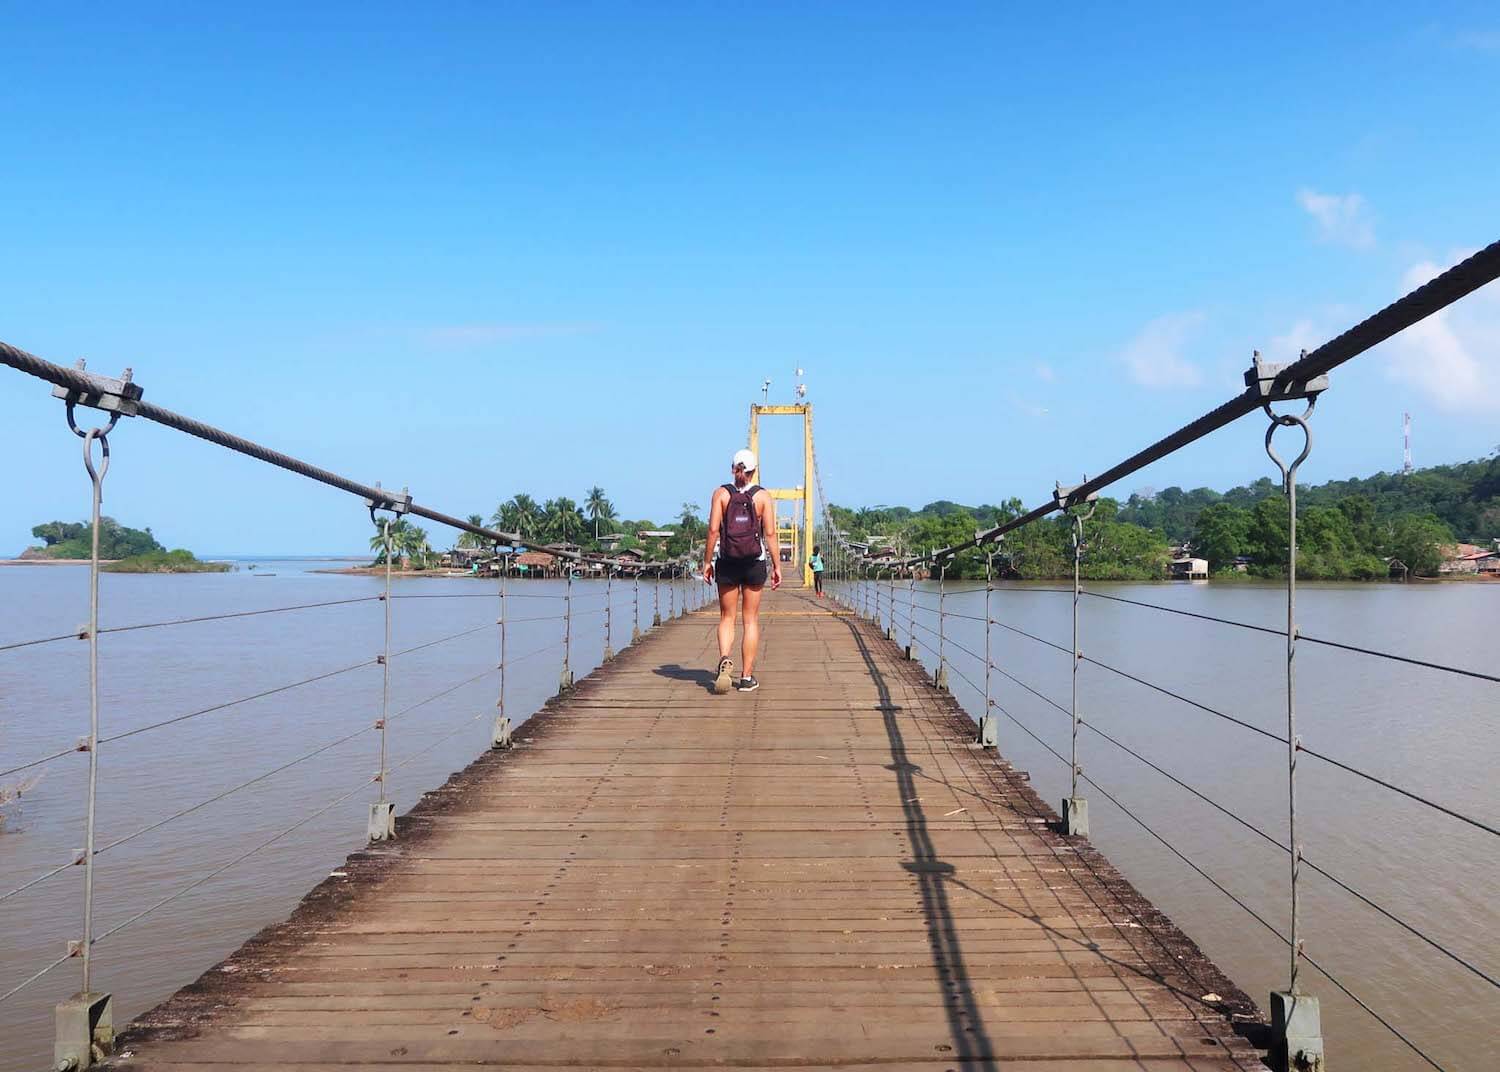 Kim walking on bridge over river